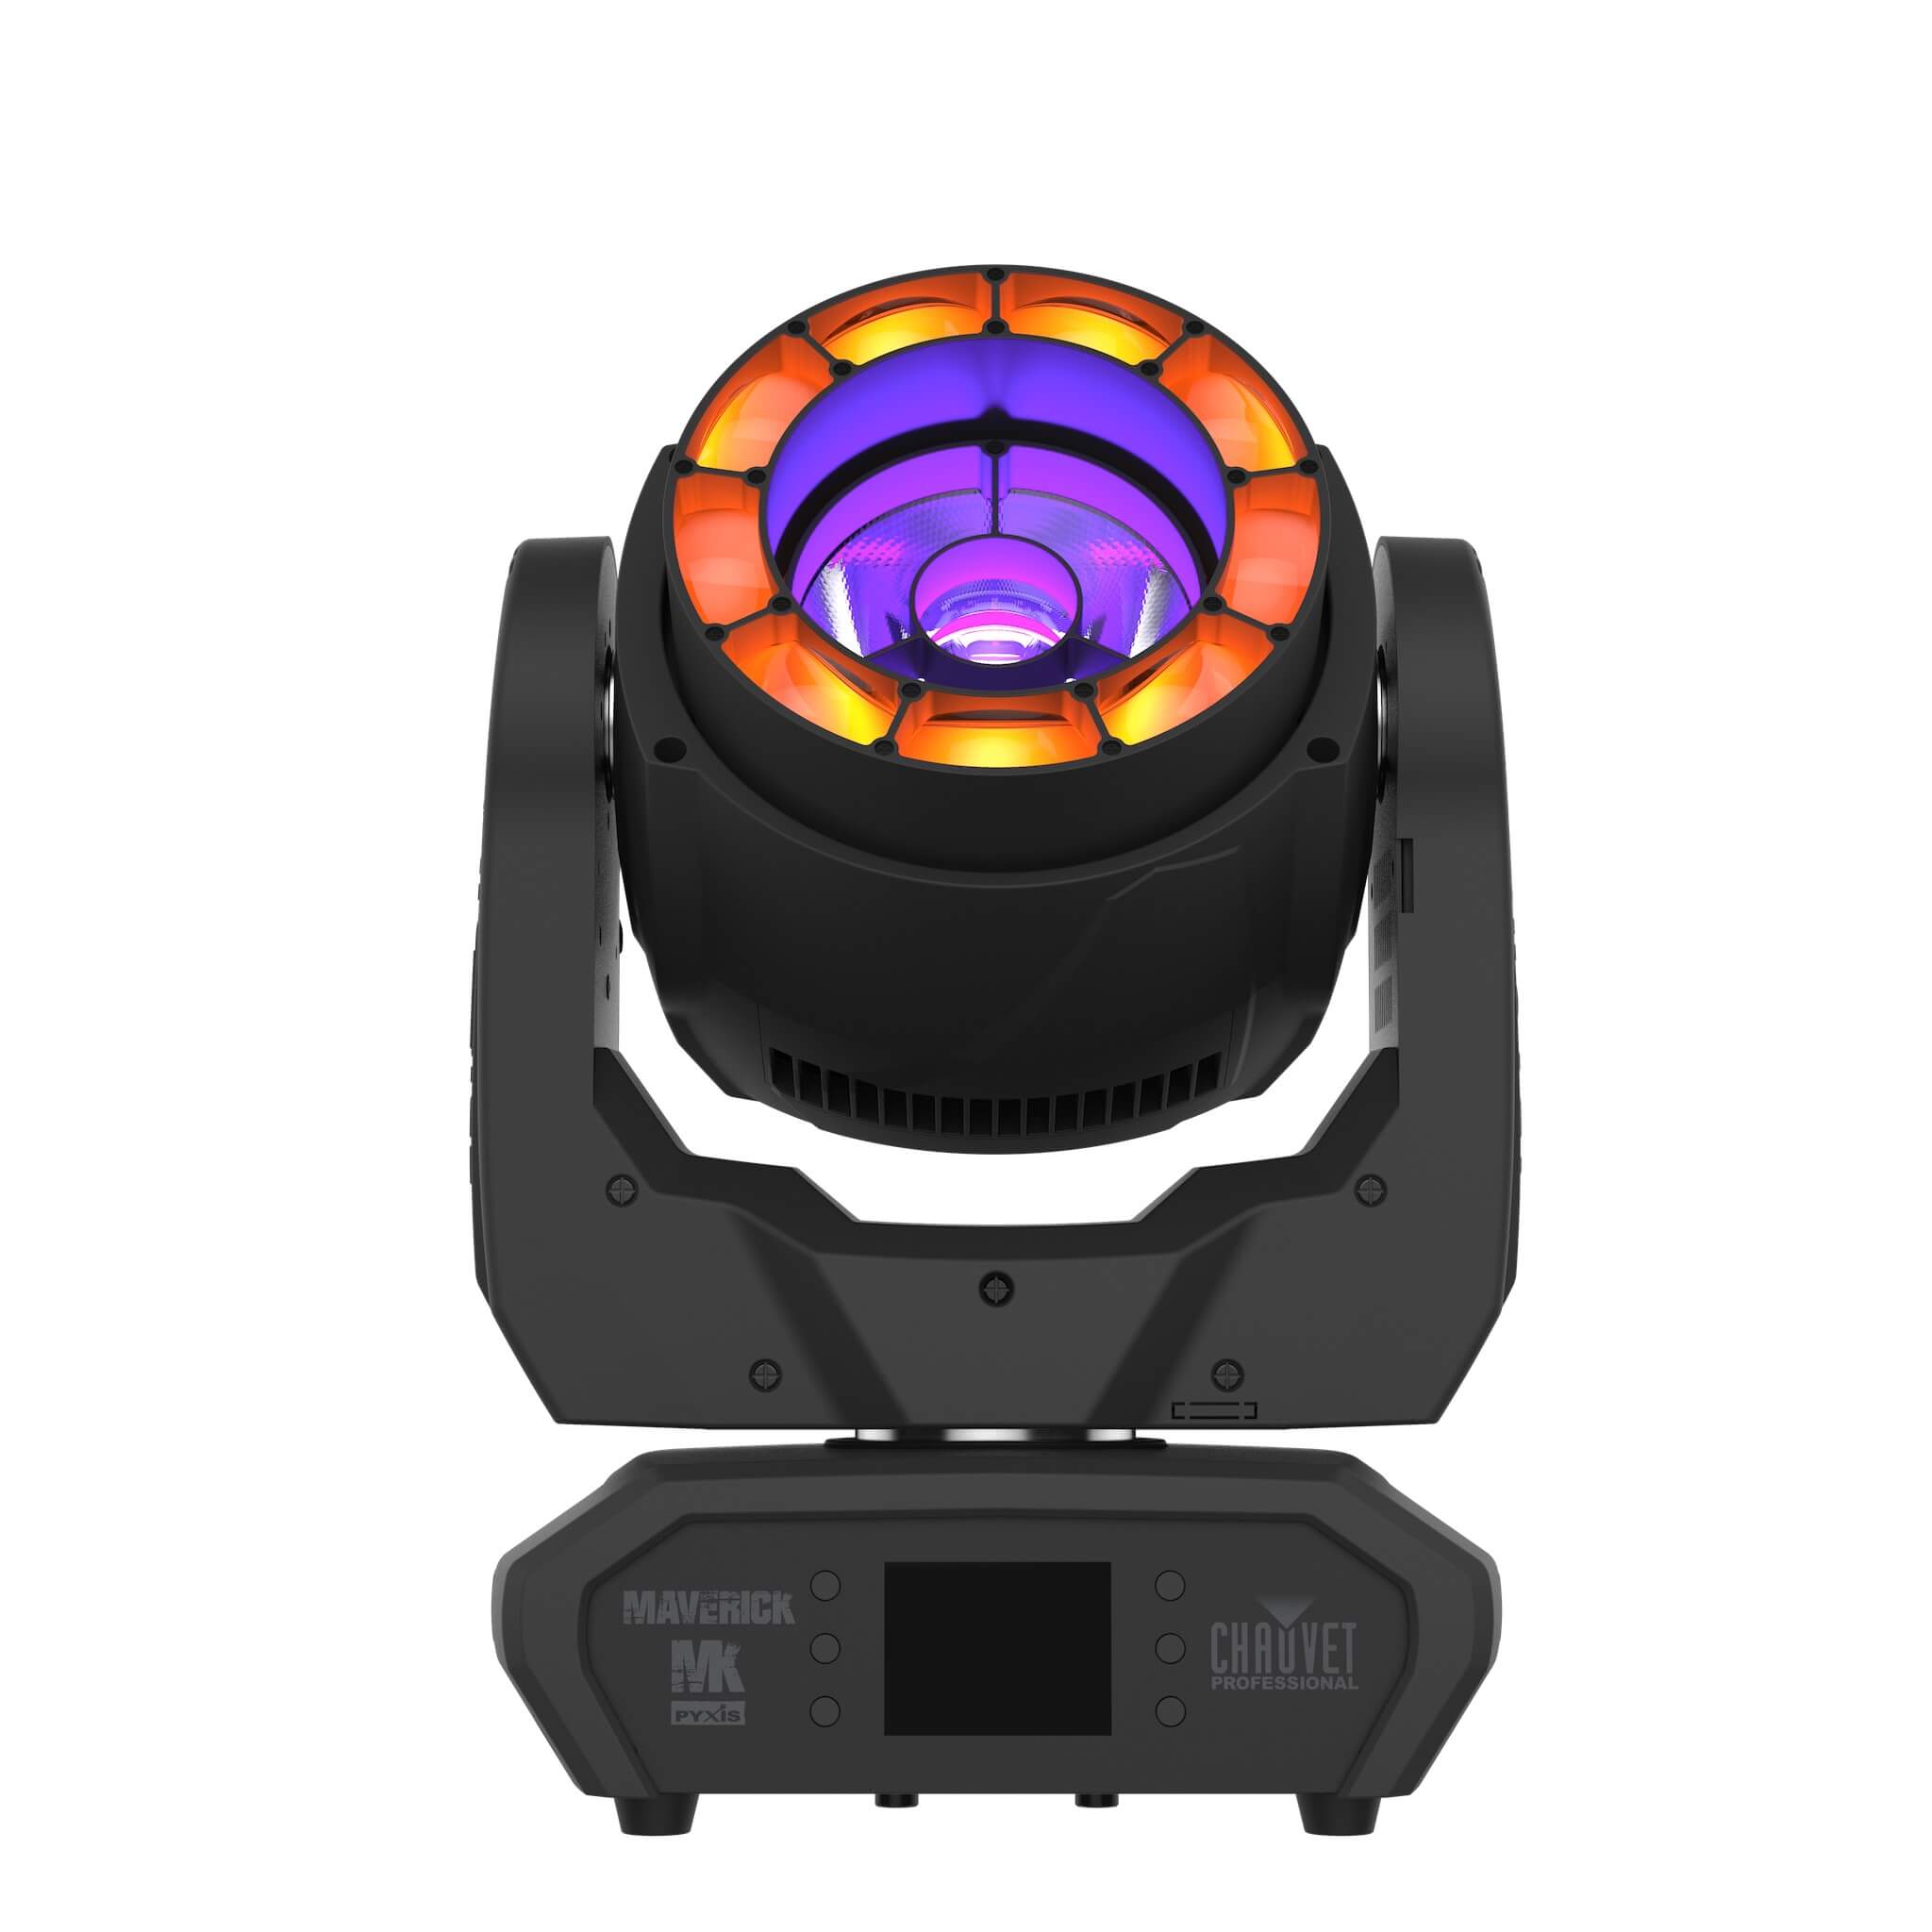 Chauvet Professional Maverick MK Pyxis - LED Moving Head Light, front